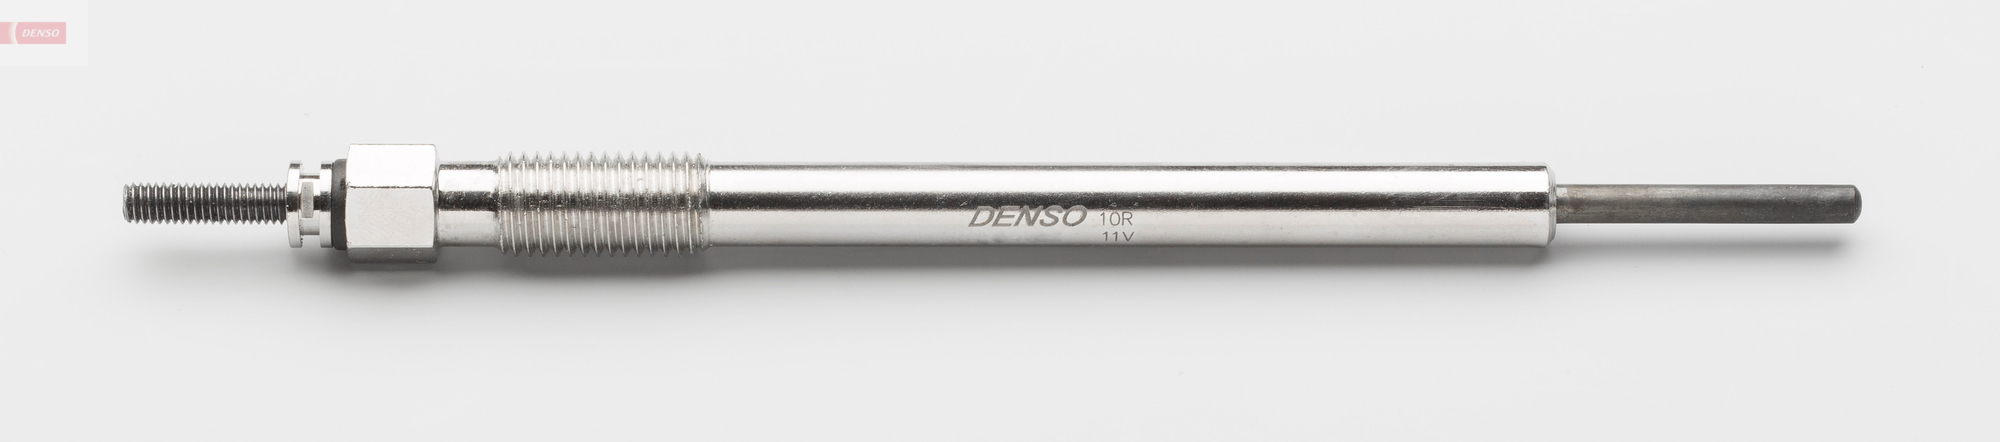 Свеча накаливания   DG-600   DENSO